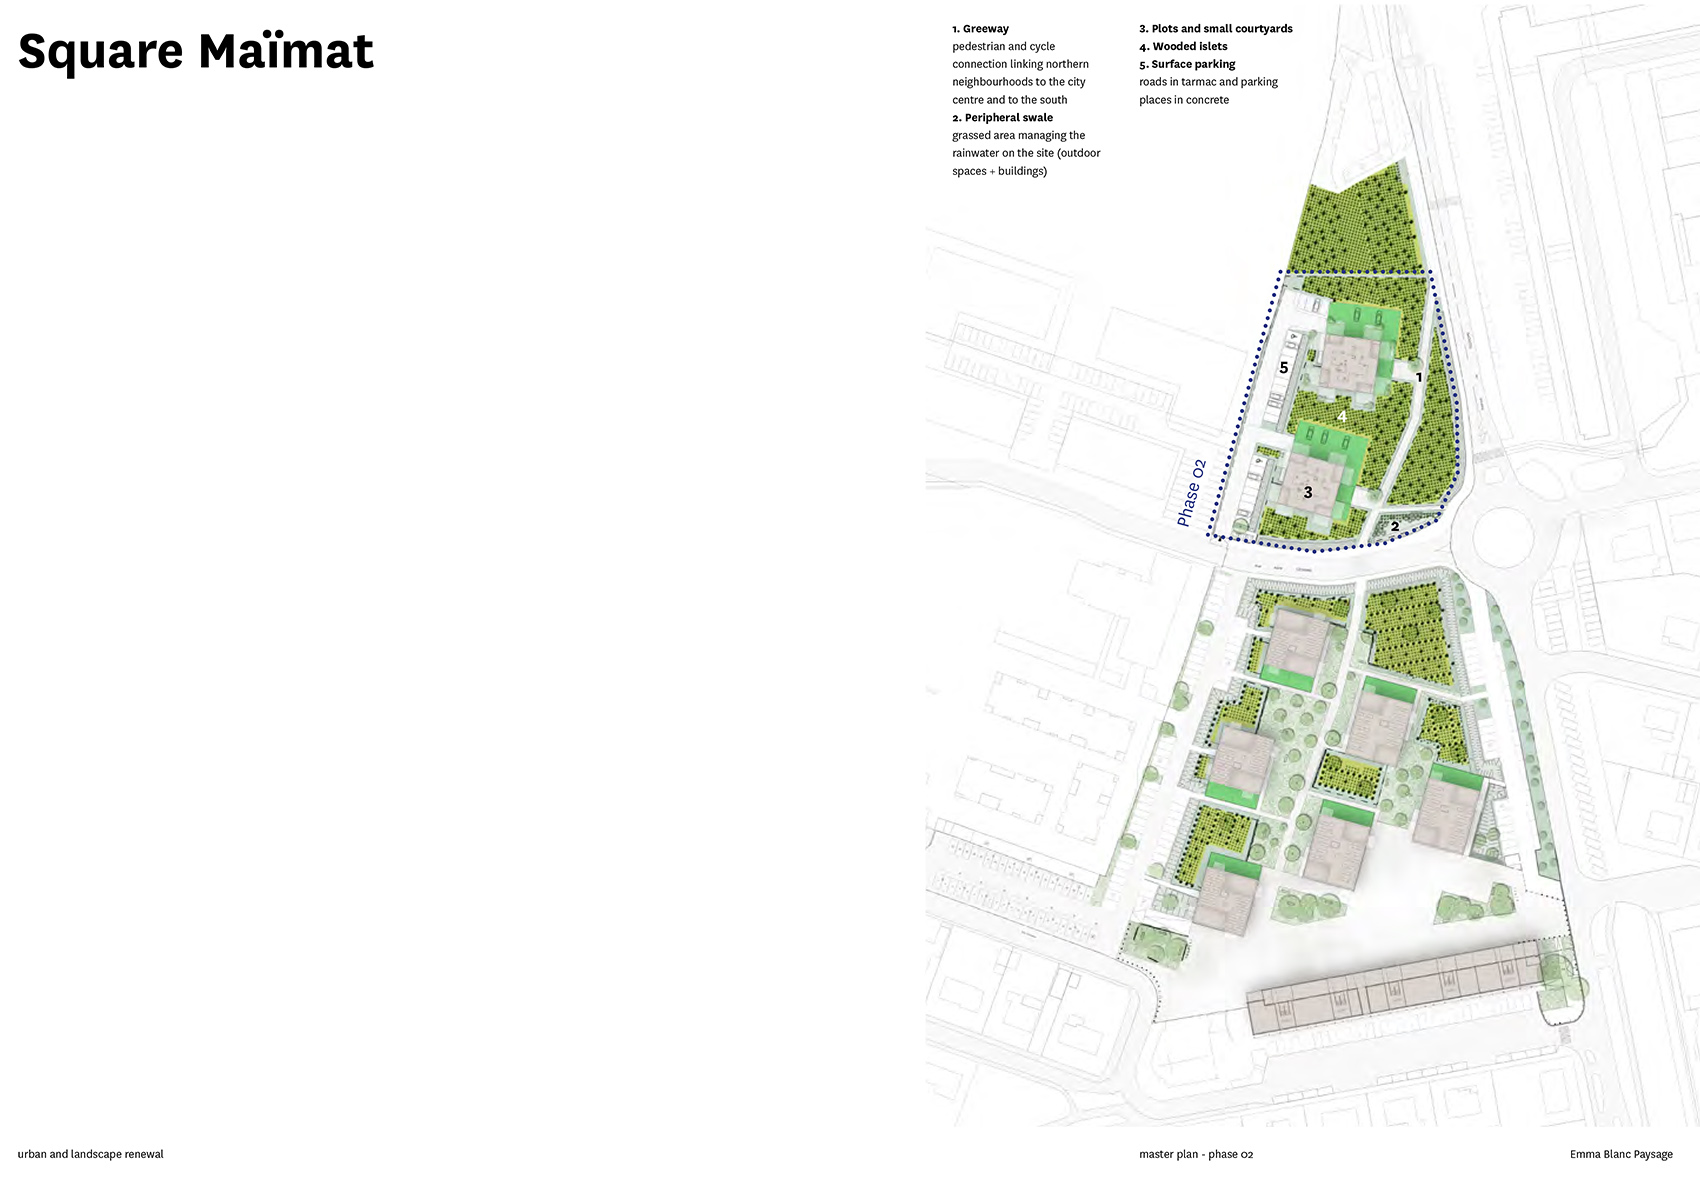 Square Maïmat住宅区更新，法国/释放公共空间，连接社区居民-99